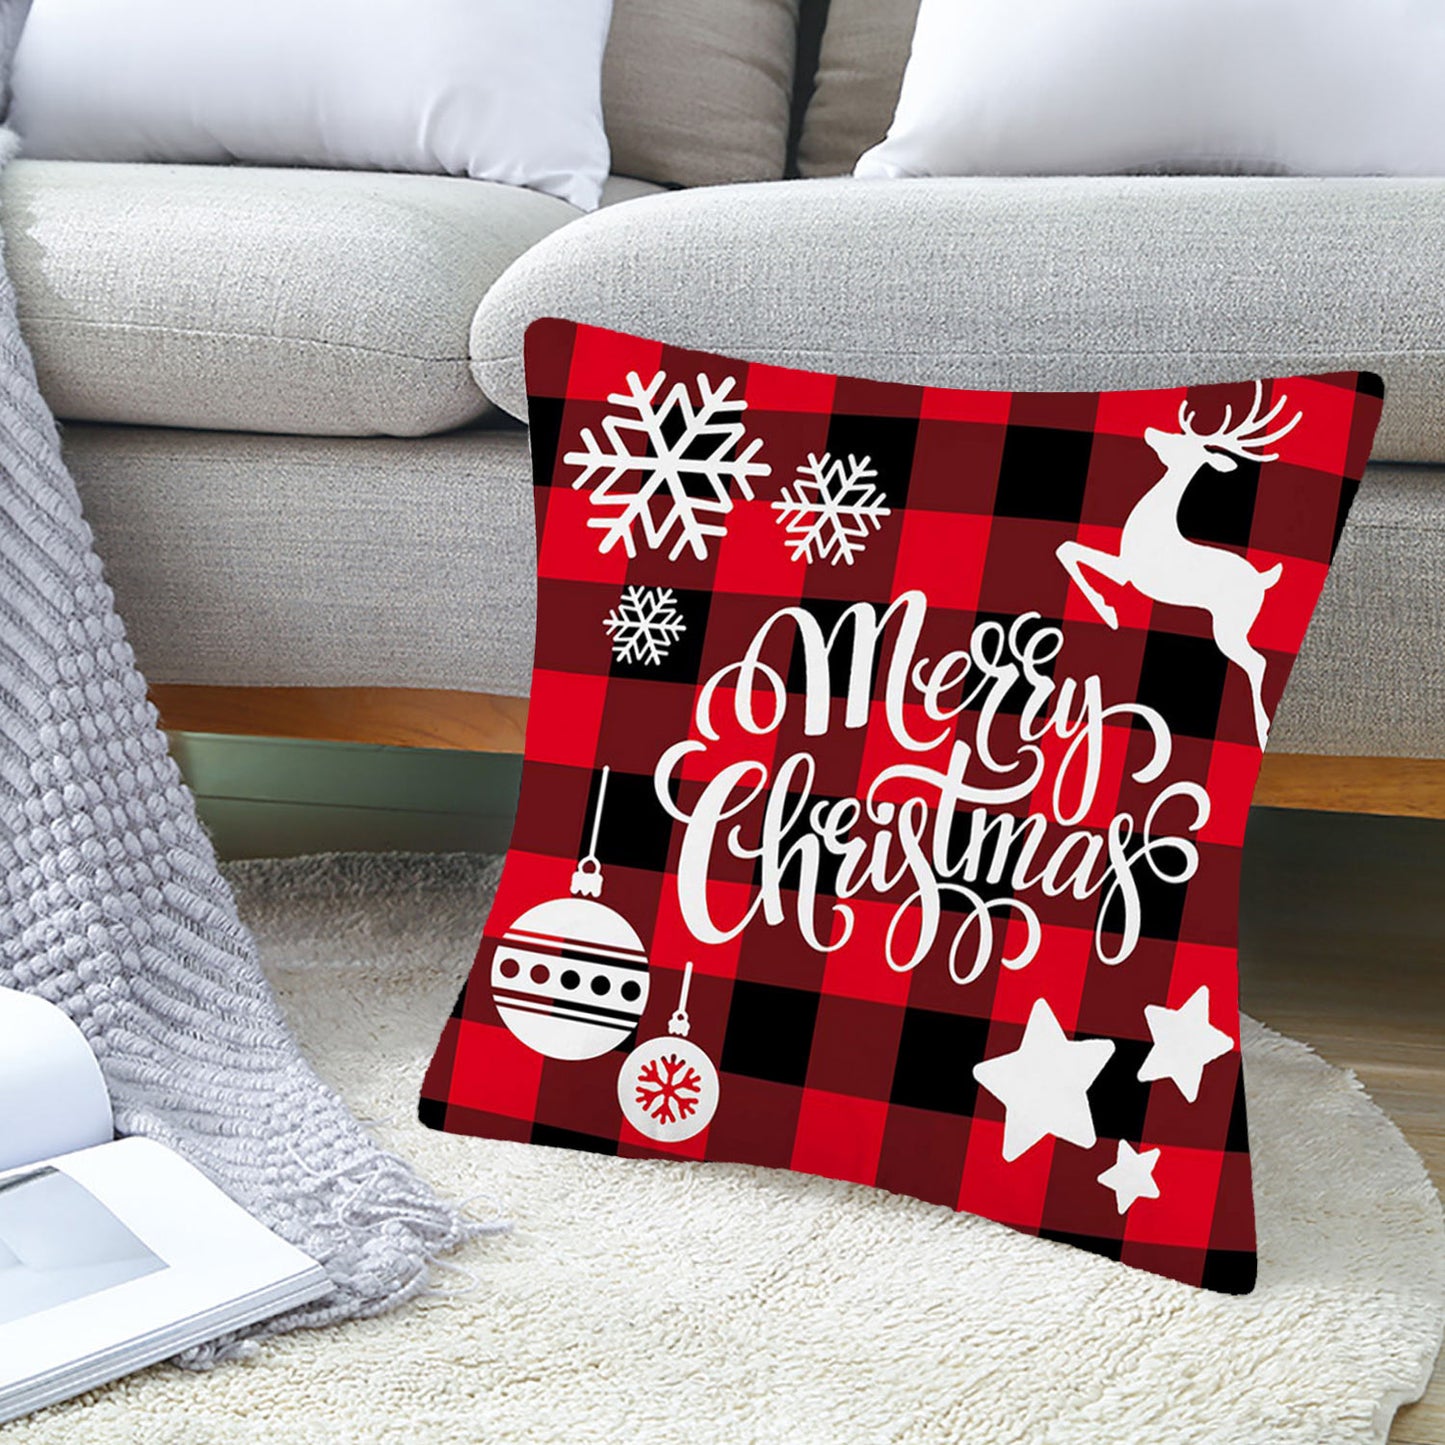 Merry Christmas Throw Linen Pillow Cushion Cover Case